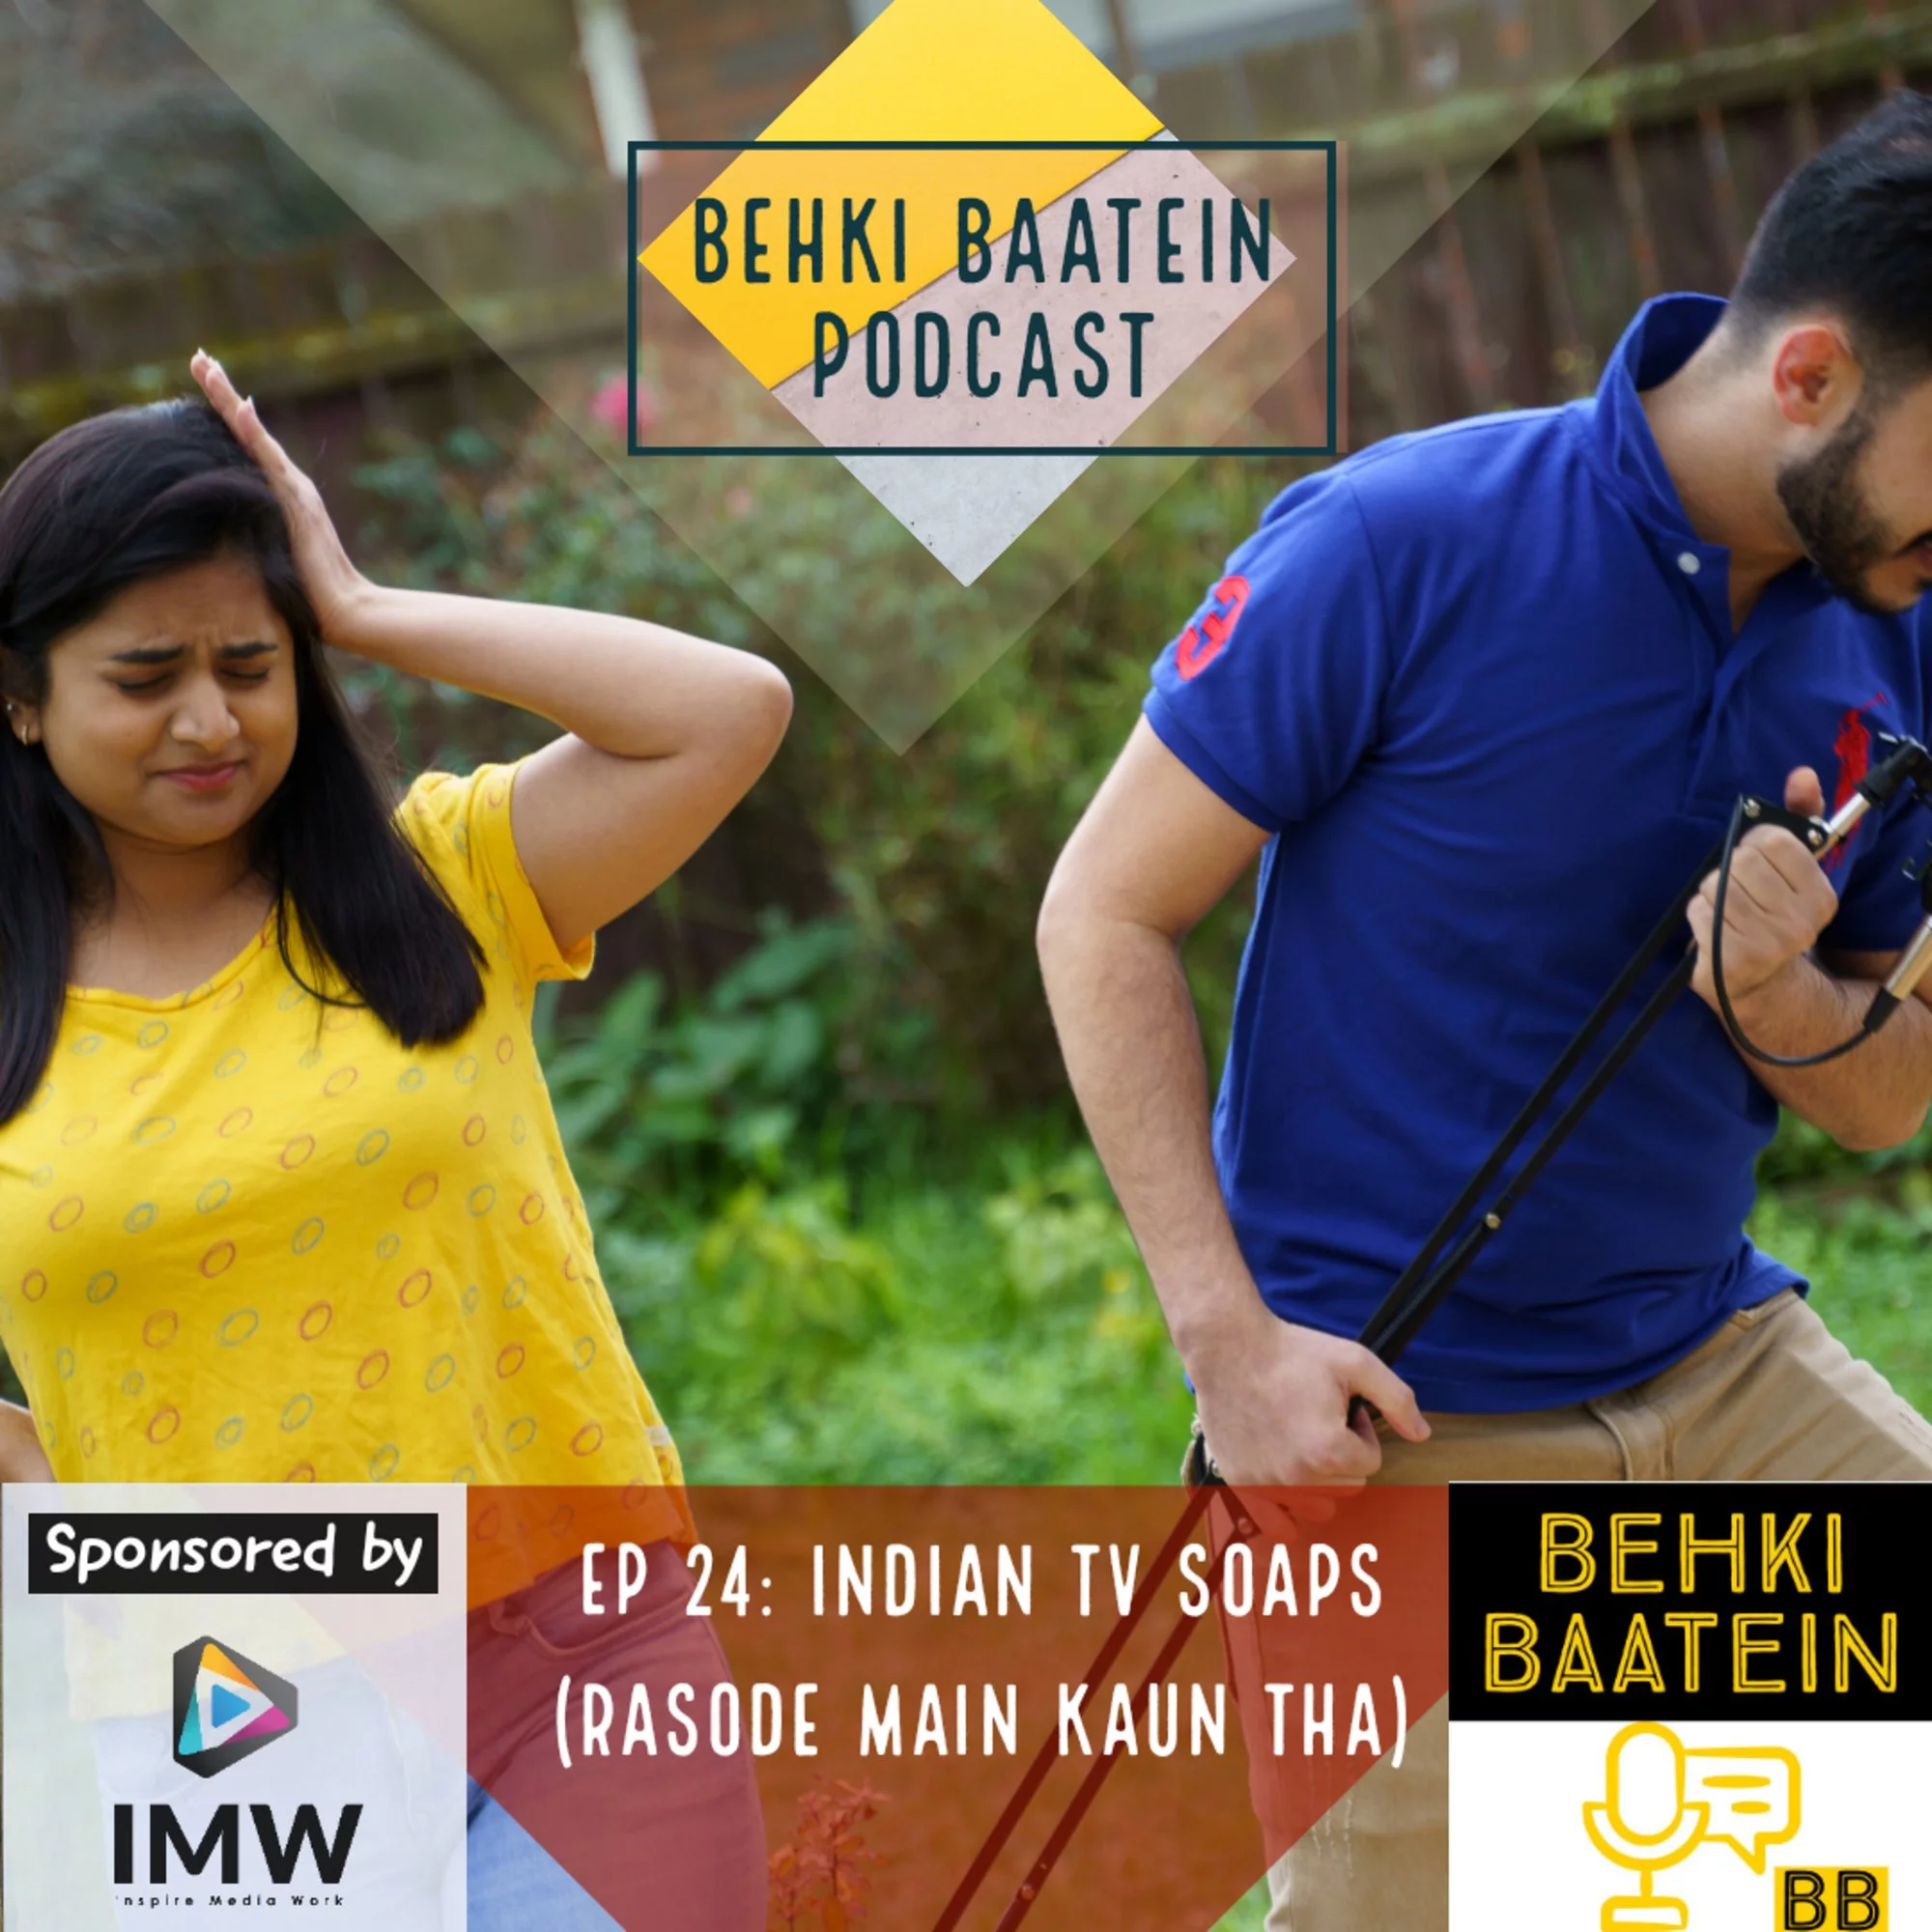 EP 24: Indian TV Soaps- "Rasode mai kaun tha?" - With Ruzbeh Palsetia and Devika Mhetar | 